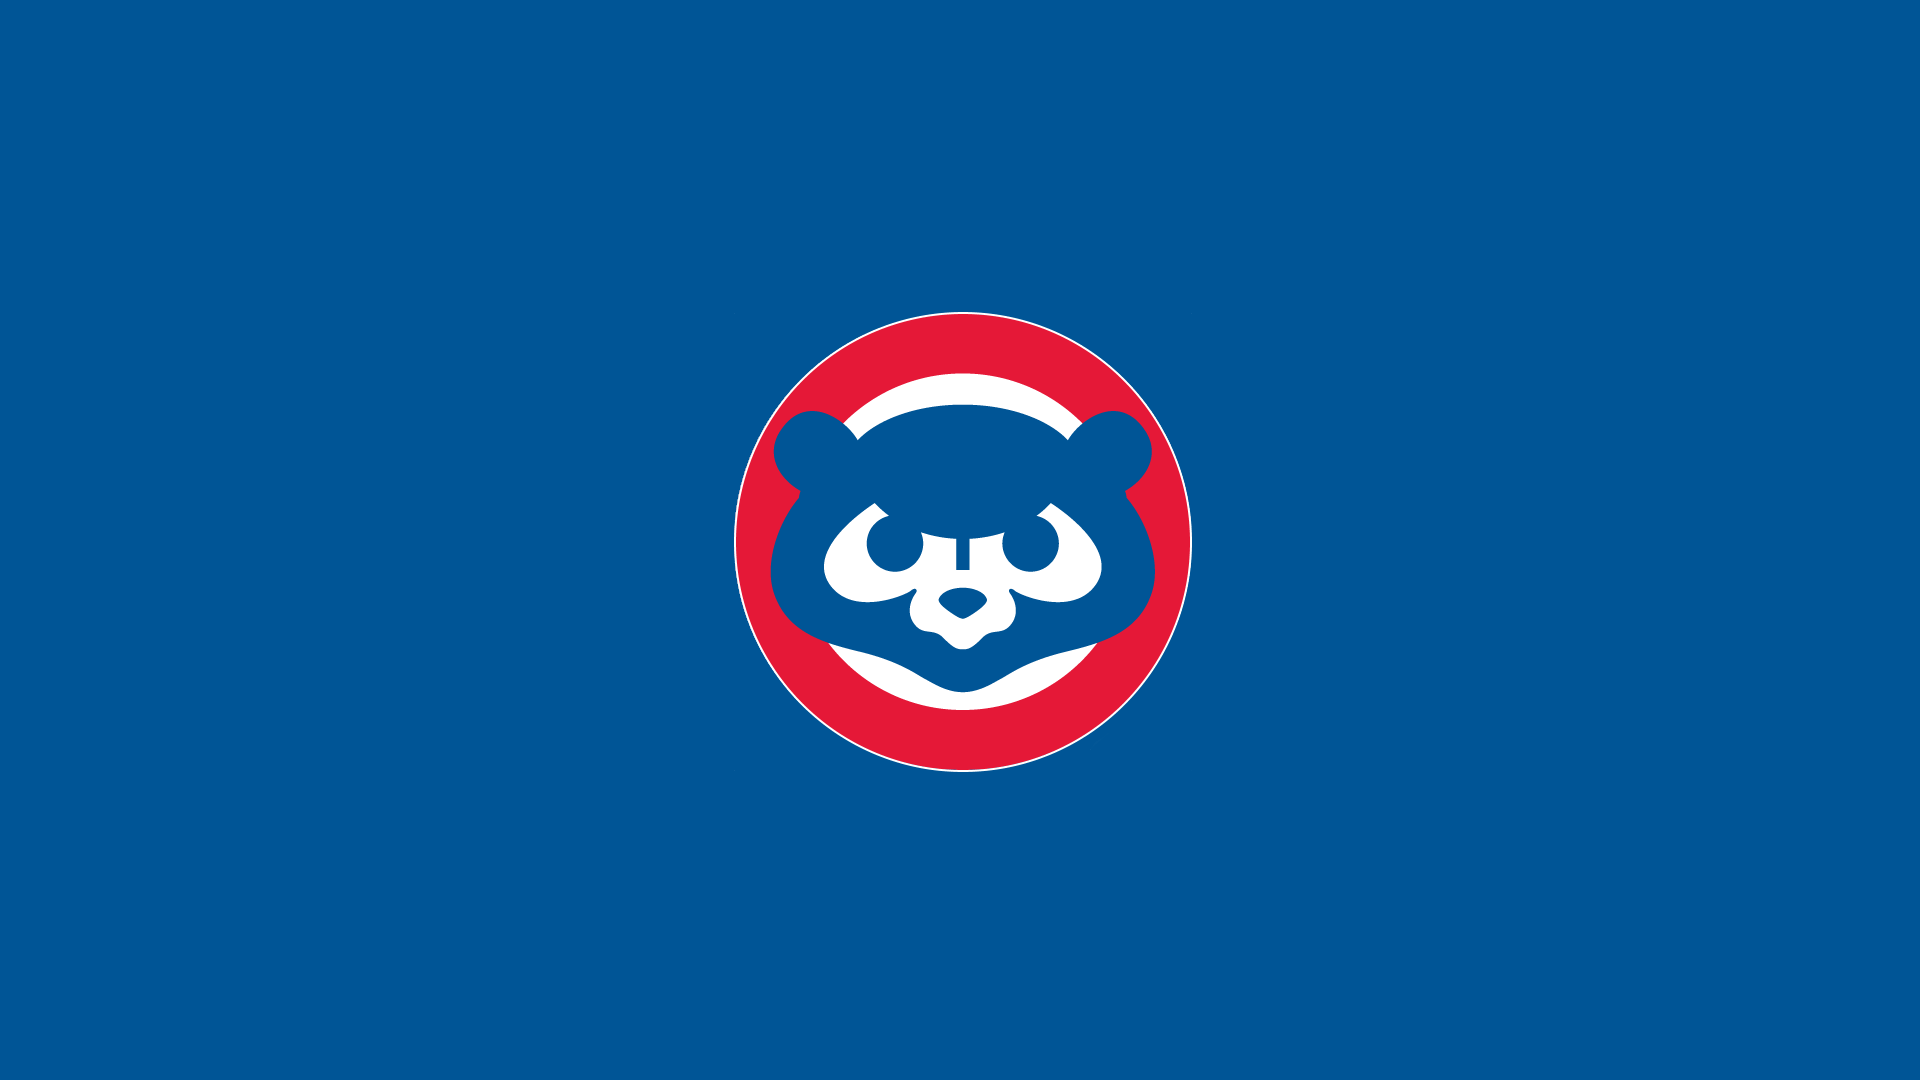 Chicago Cubs Wallpaper